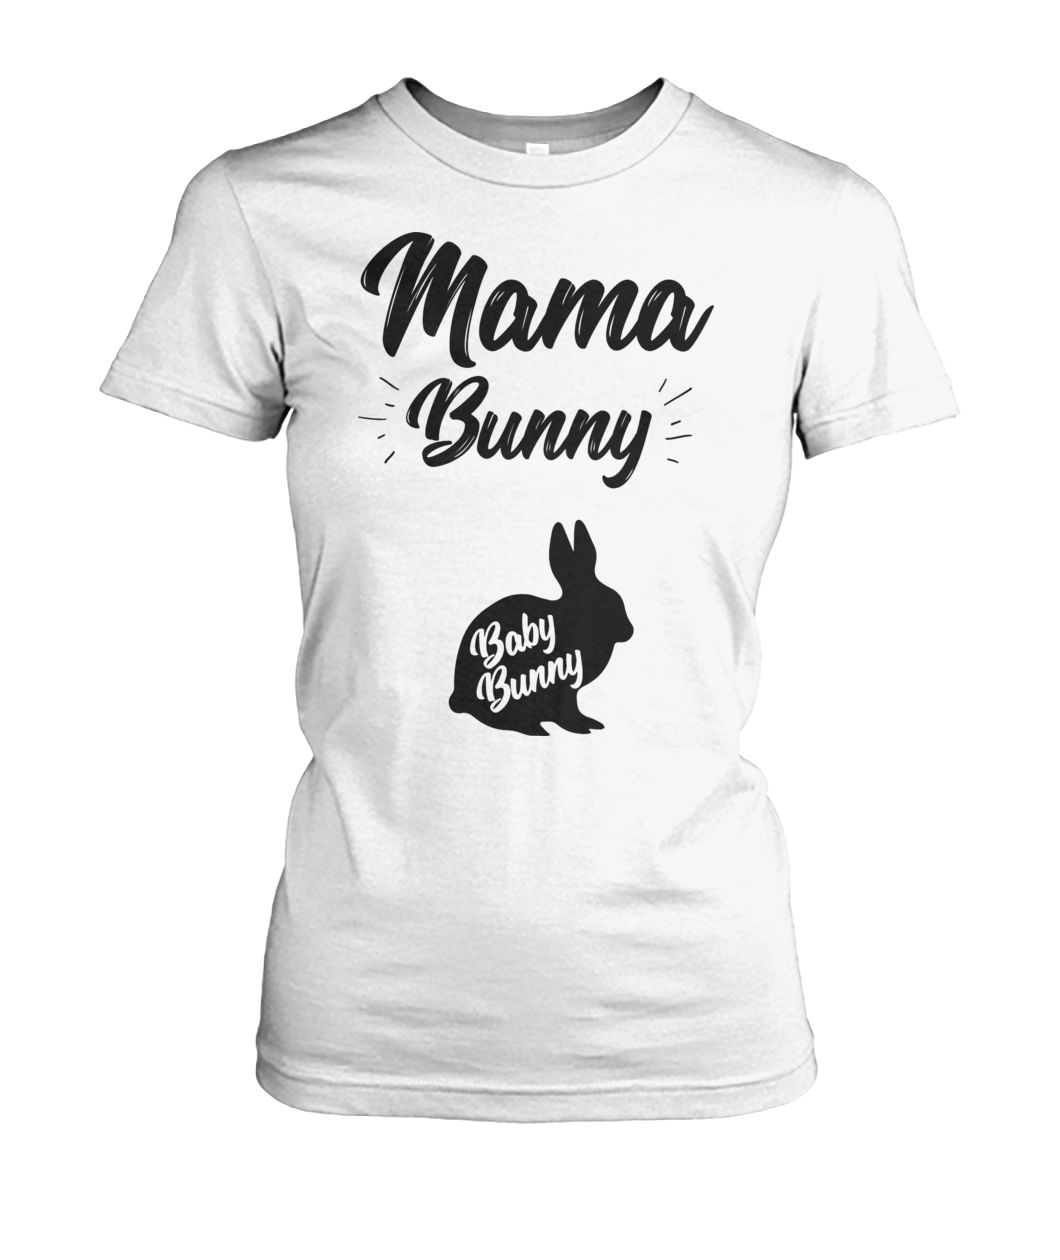 Mama bunny baby bunny easter pregnancy women's crew tee